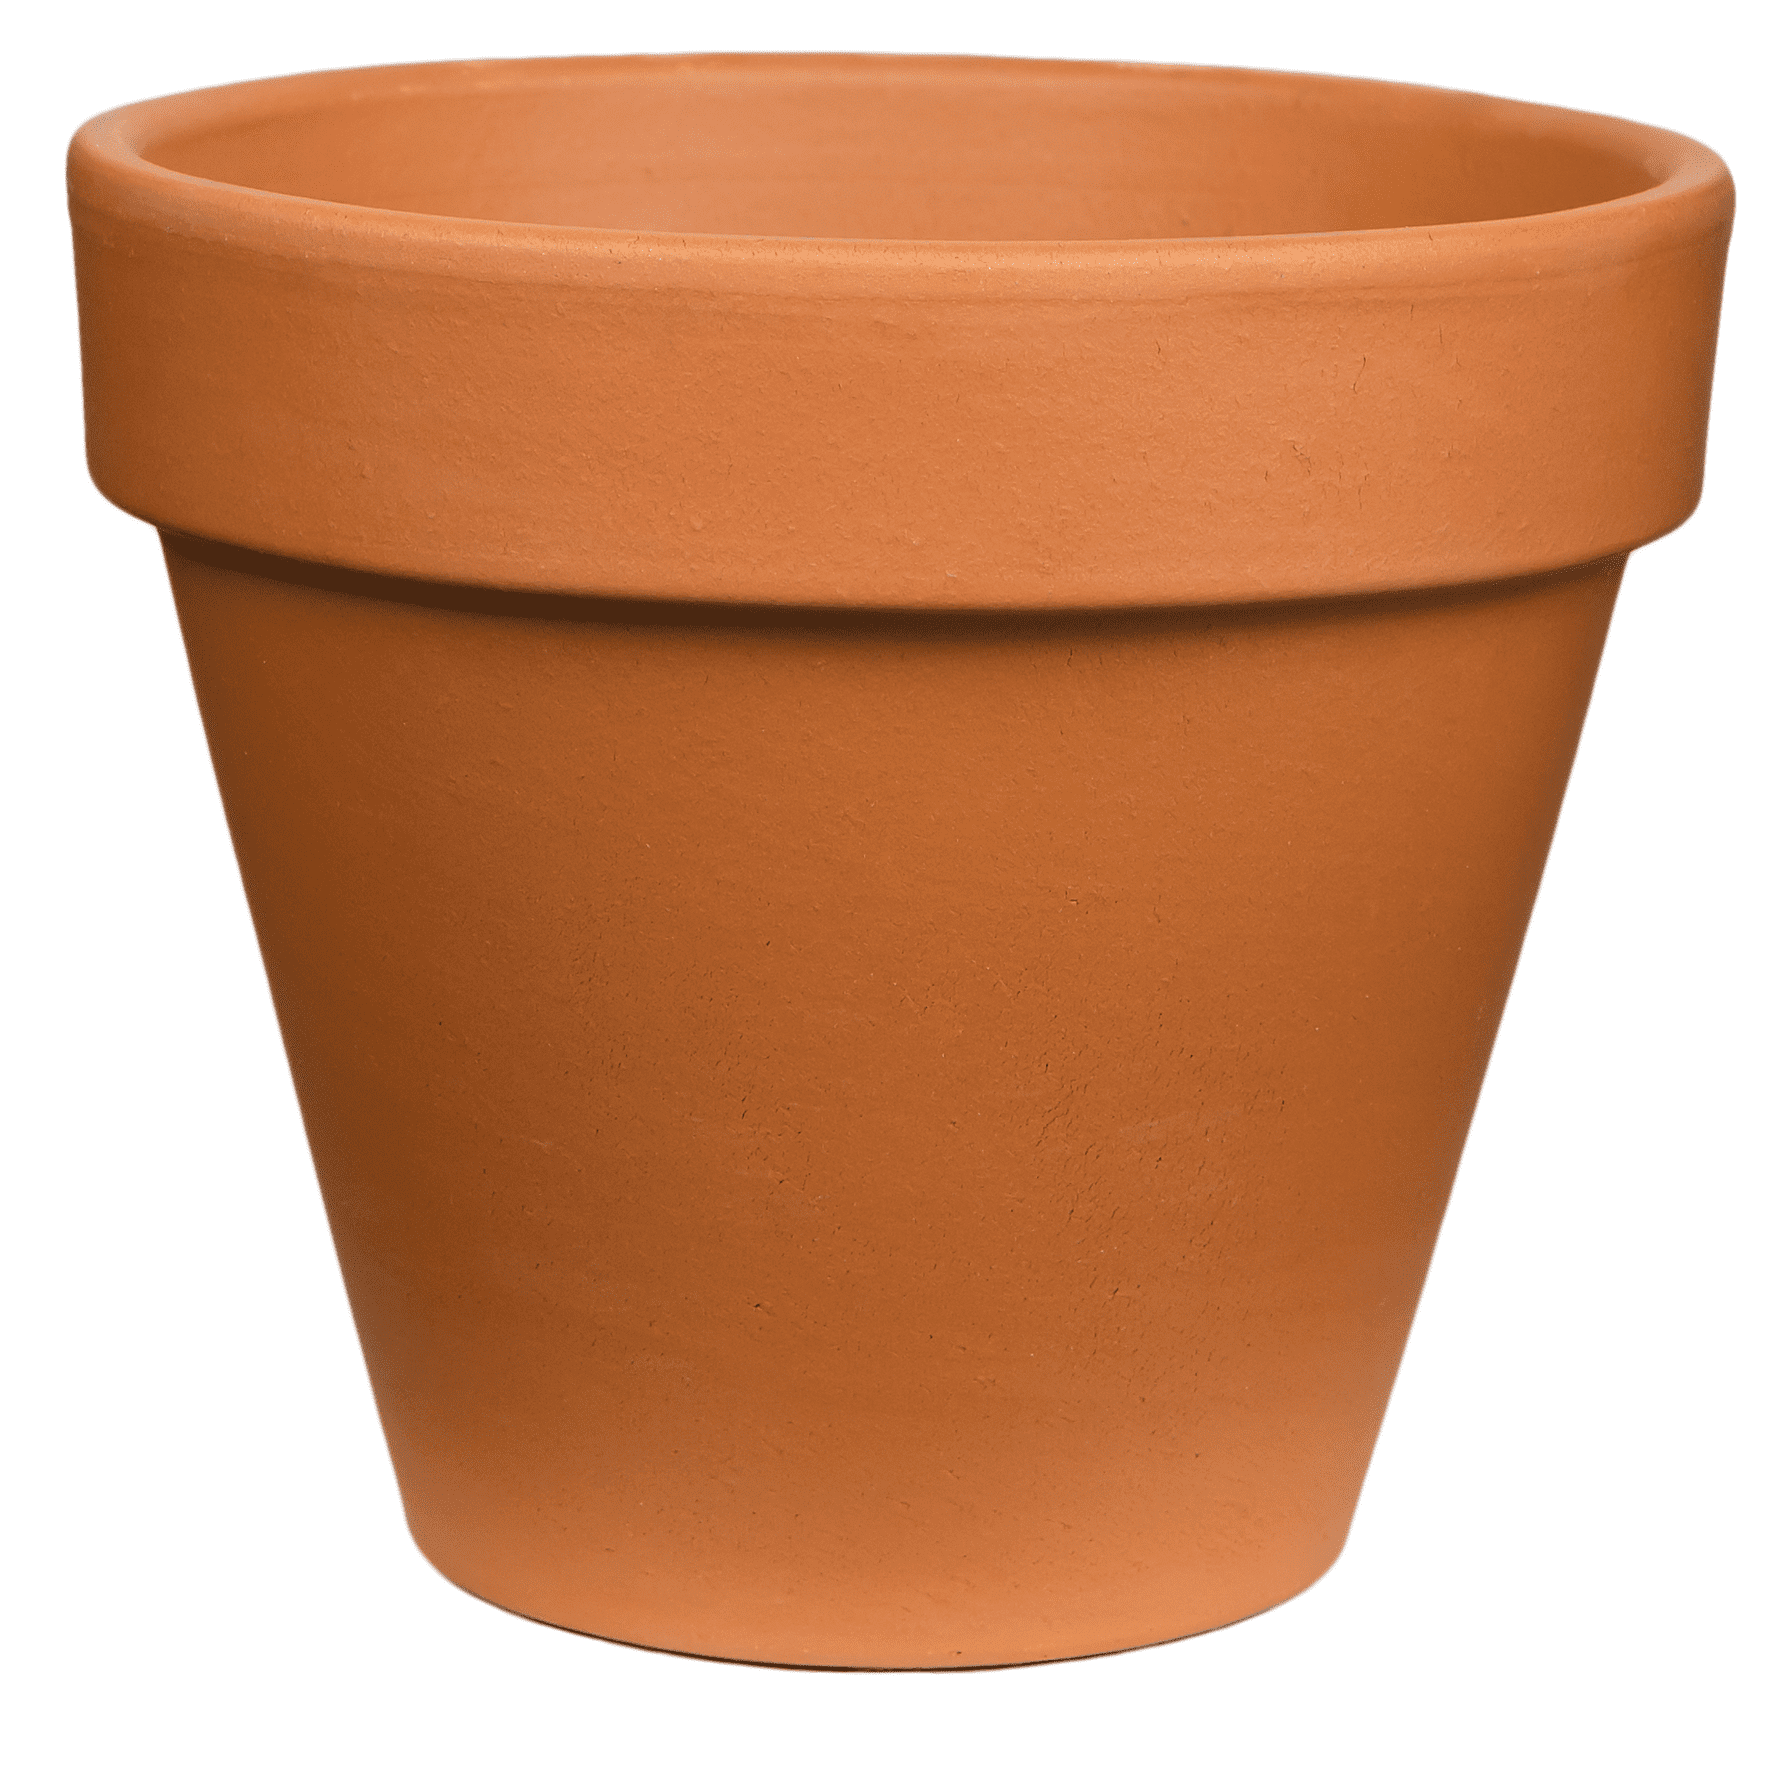 Pennington Red Terra Cotta Clay Planter, 4 inch Pot 